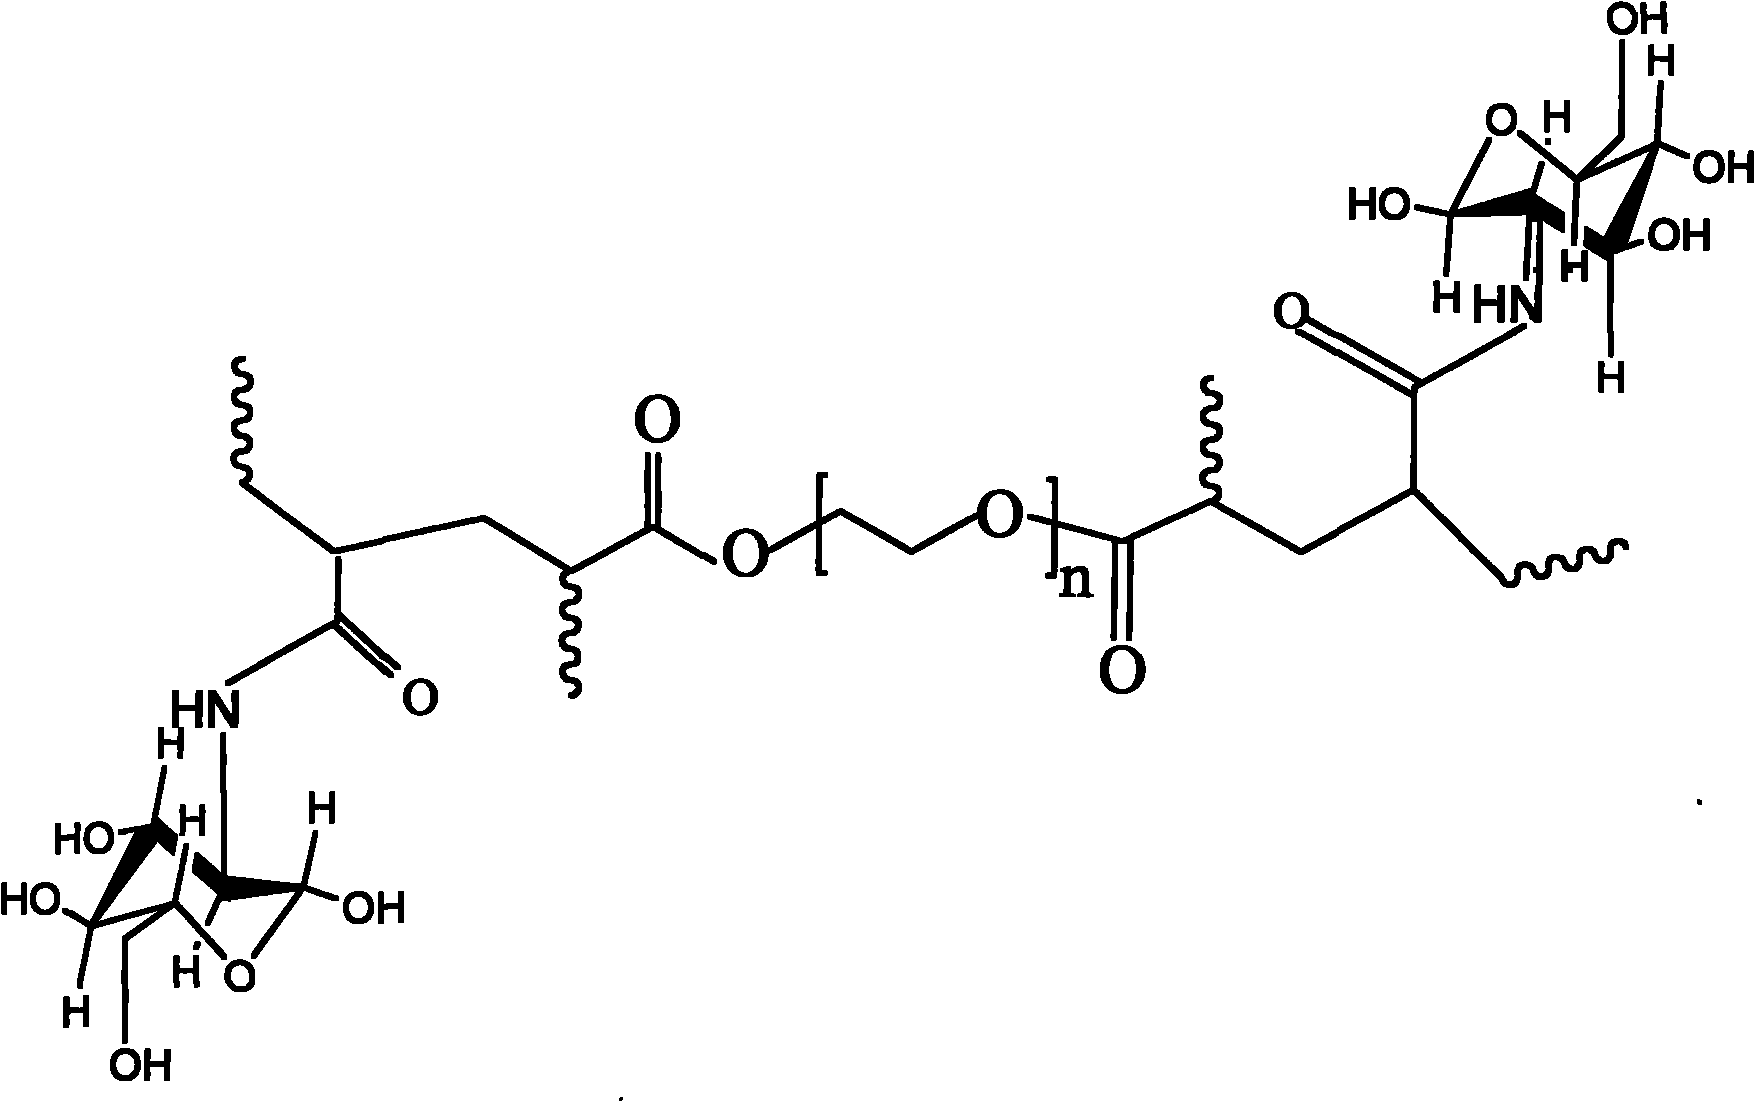 Glucosamine modified poly (ethylene glycol) diacrylate (PEGDA) hydrogel, preparation method and application thereof